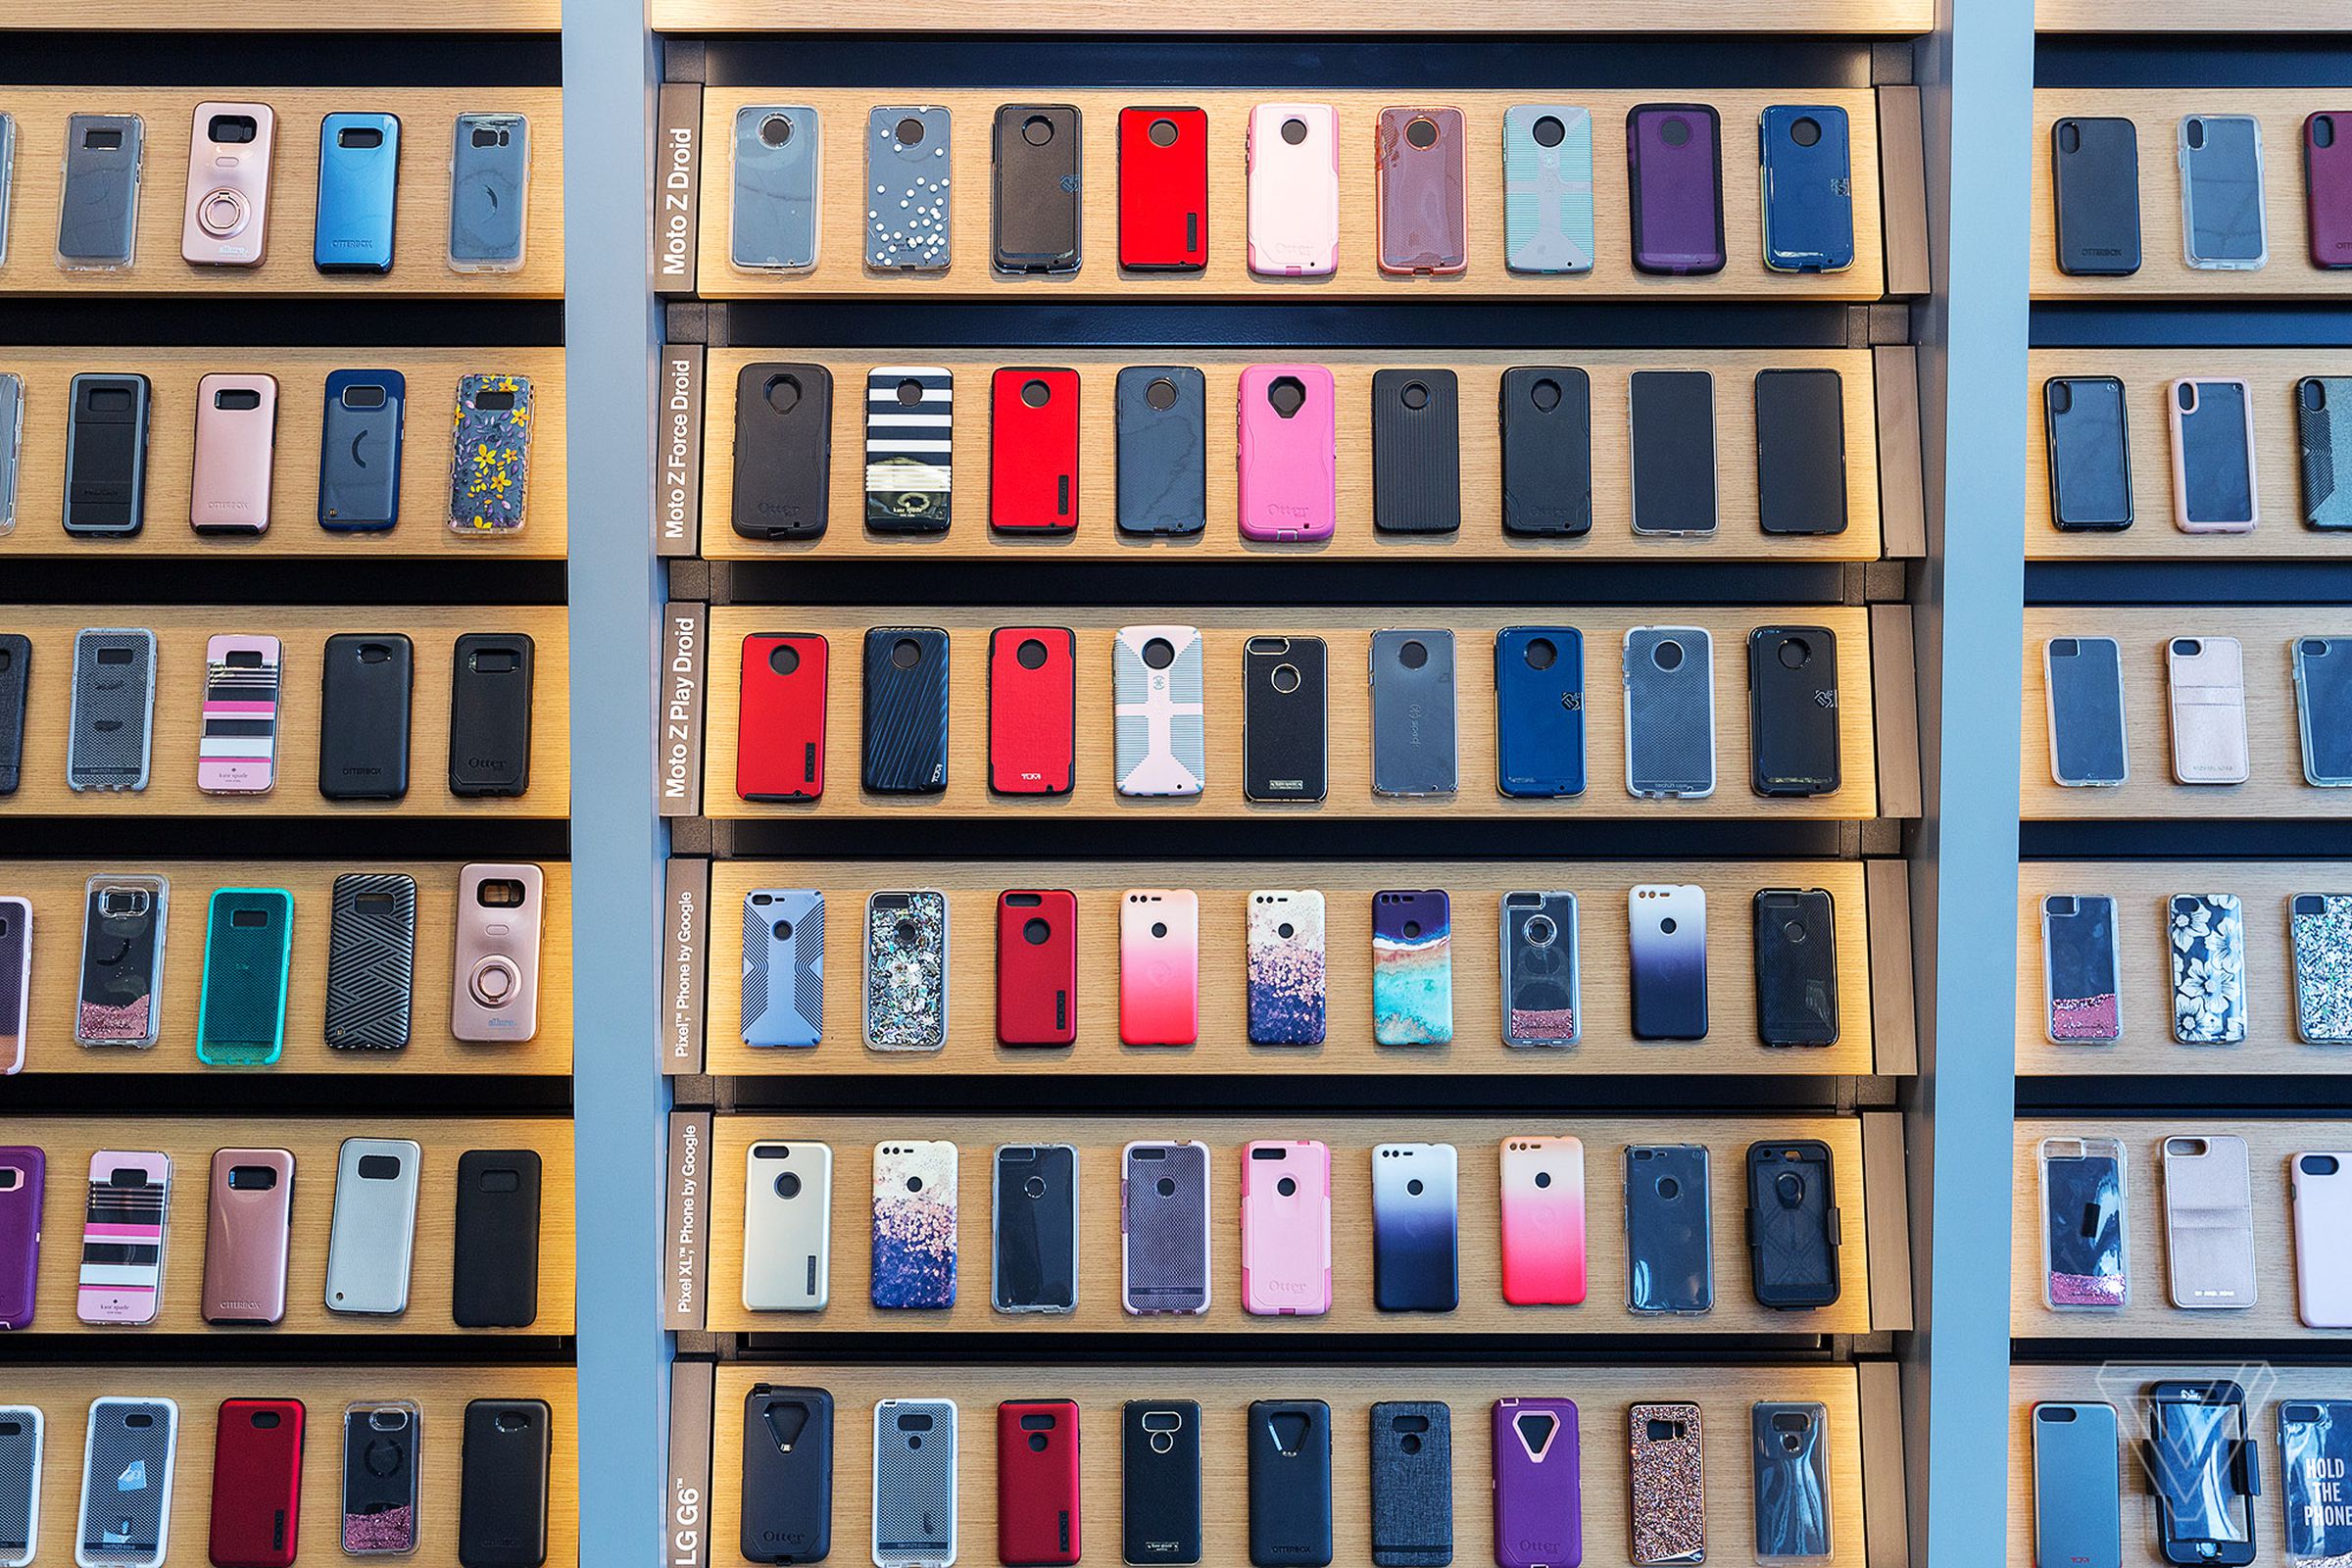 The new phone case layout in Verizon’s Next Gen stores.